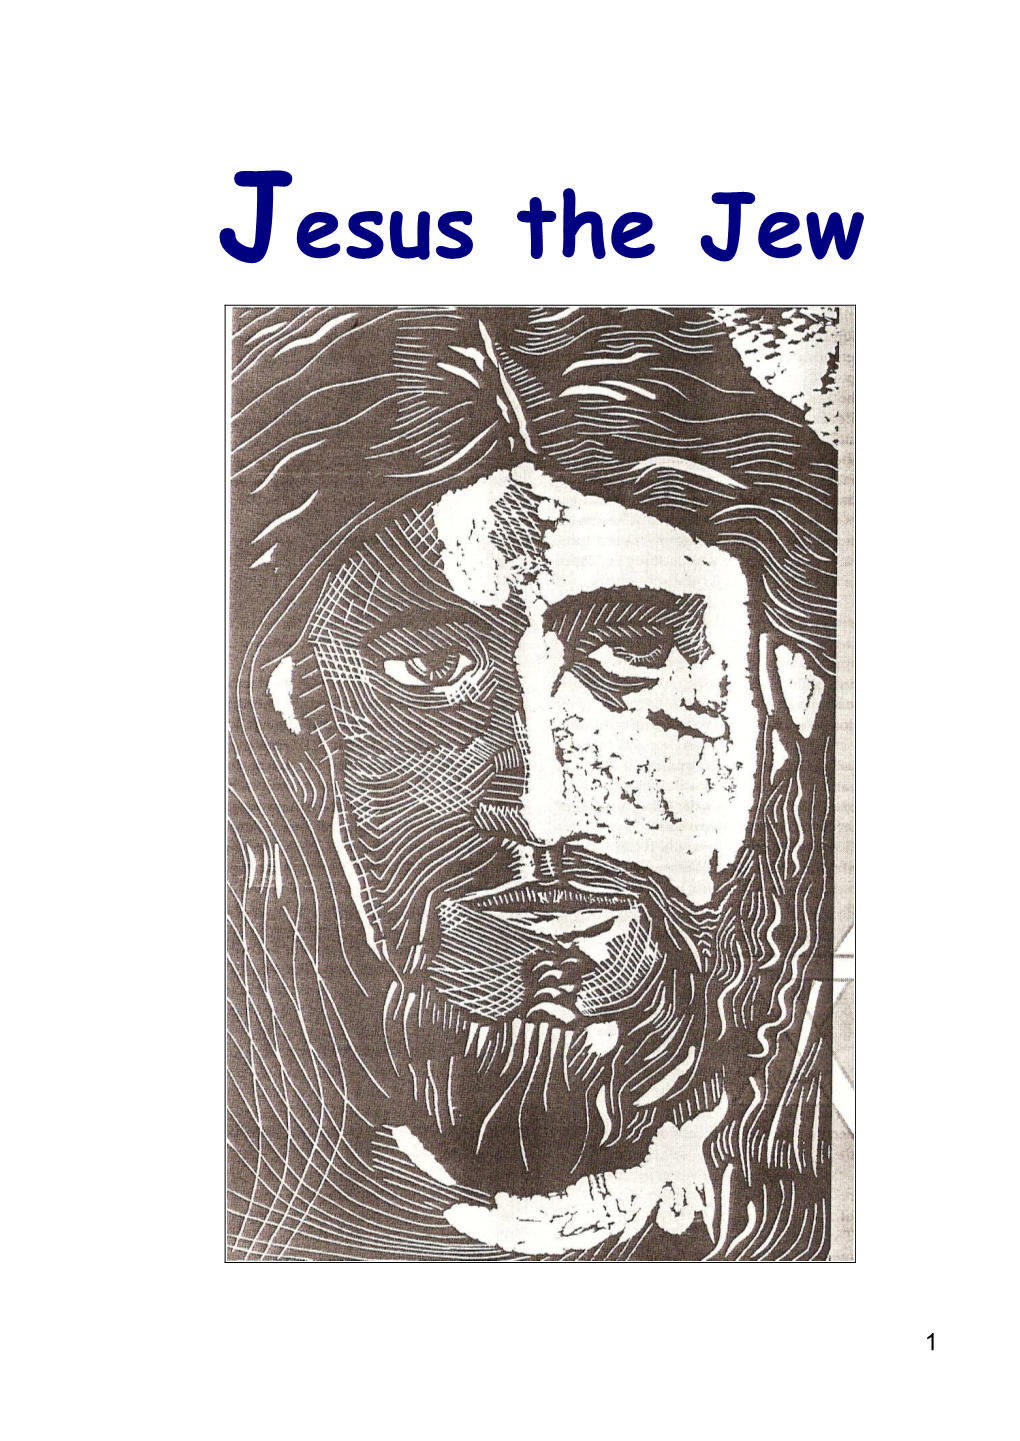 Jesus the Galilean Jew